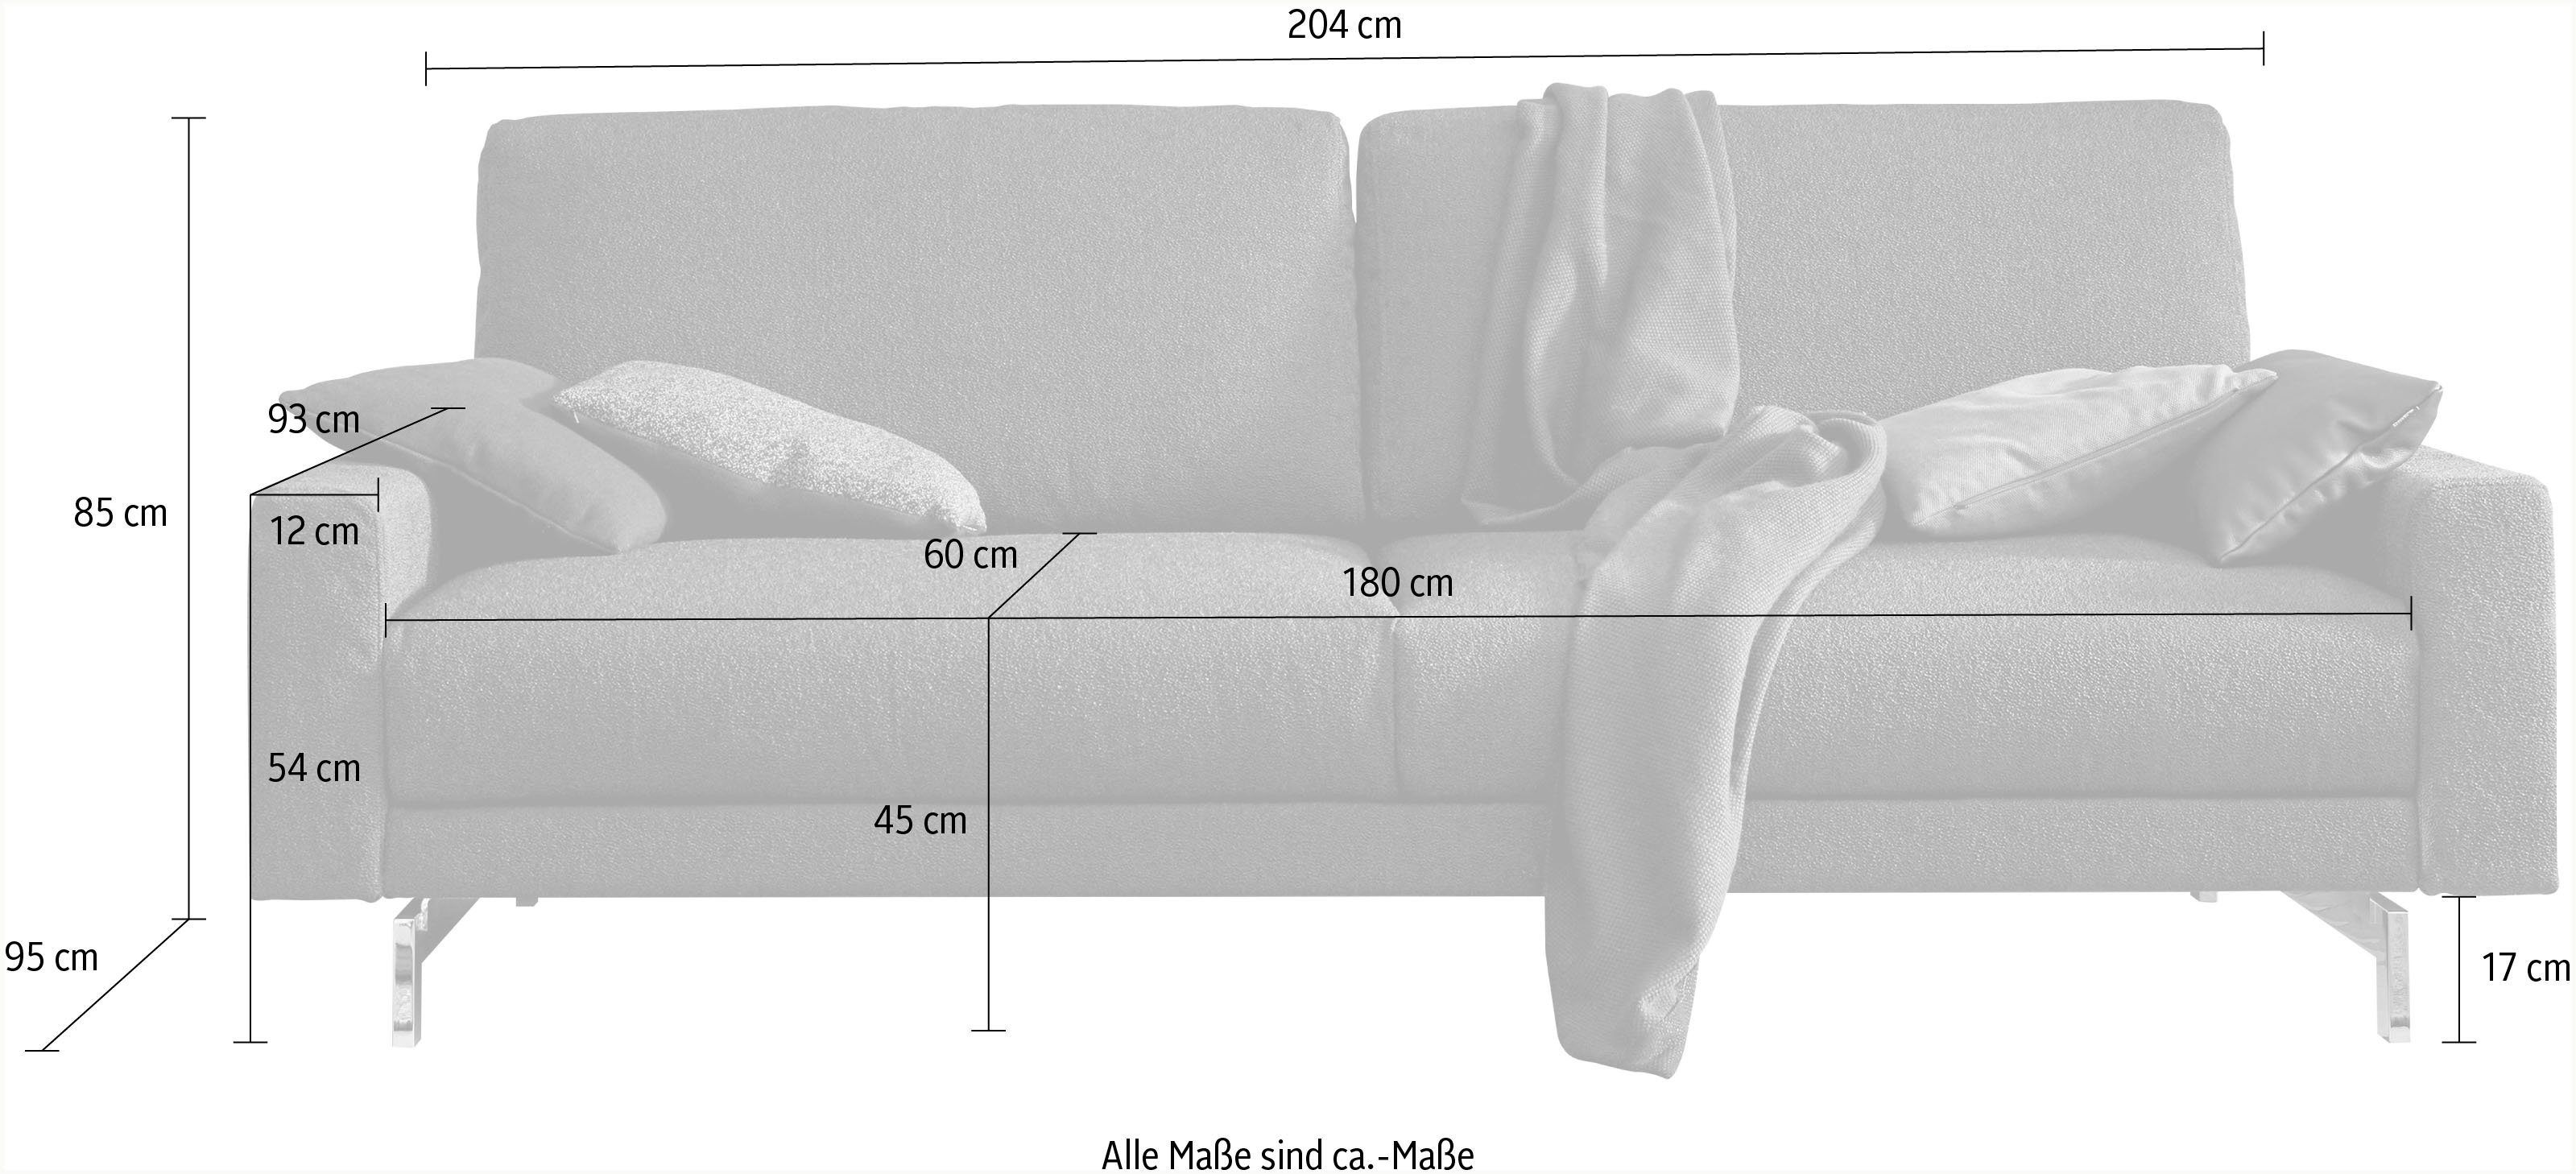 204 hs.450, niedrig, hülsta glänzend, chromfarben sofa Breite cm 3-Sitzer Fuß Armlehne